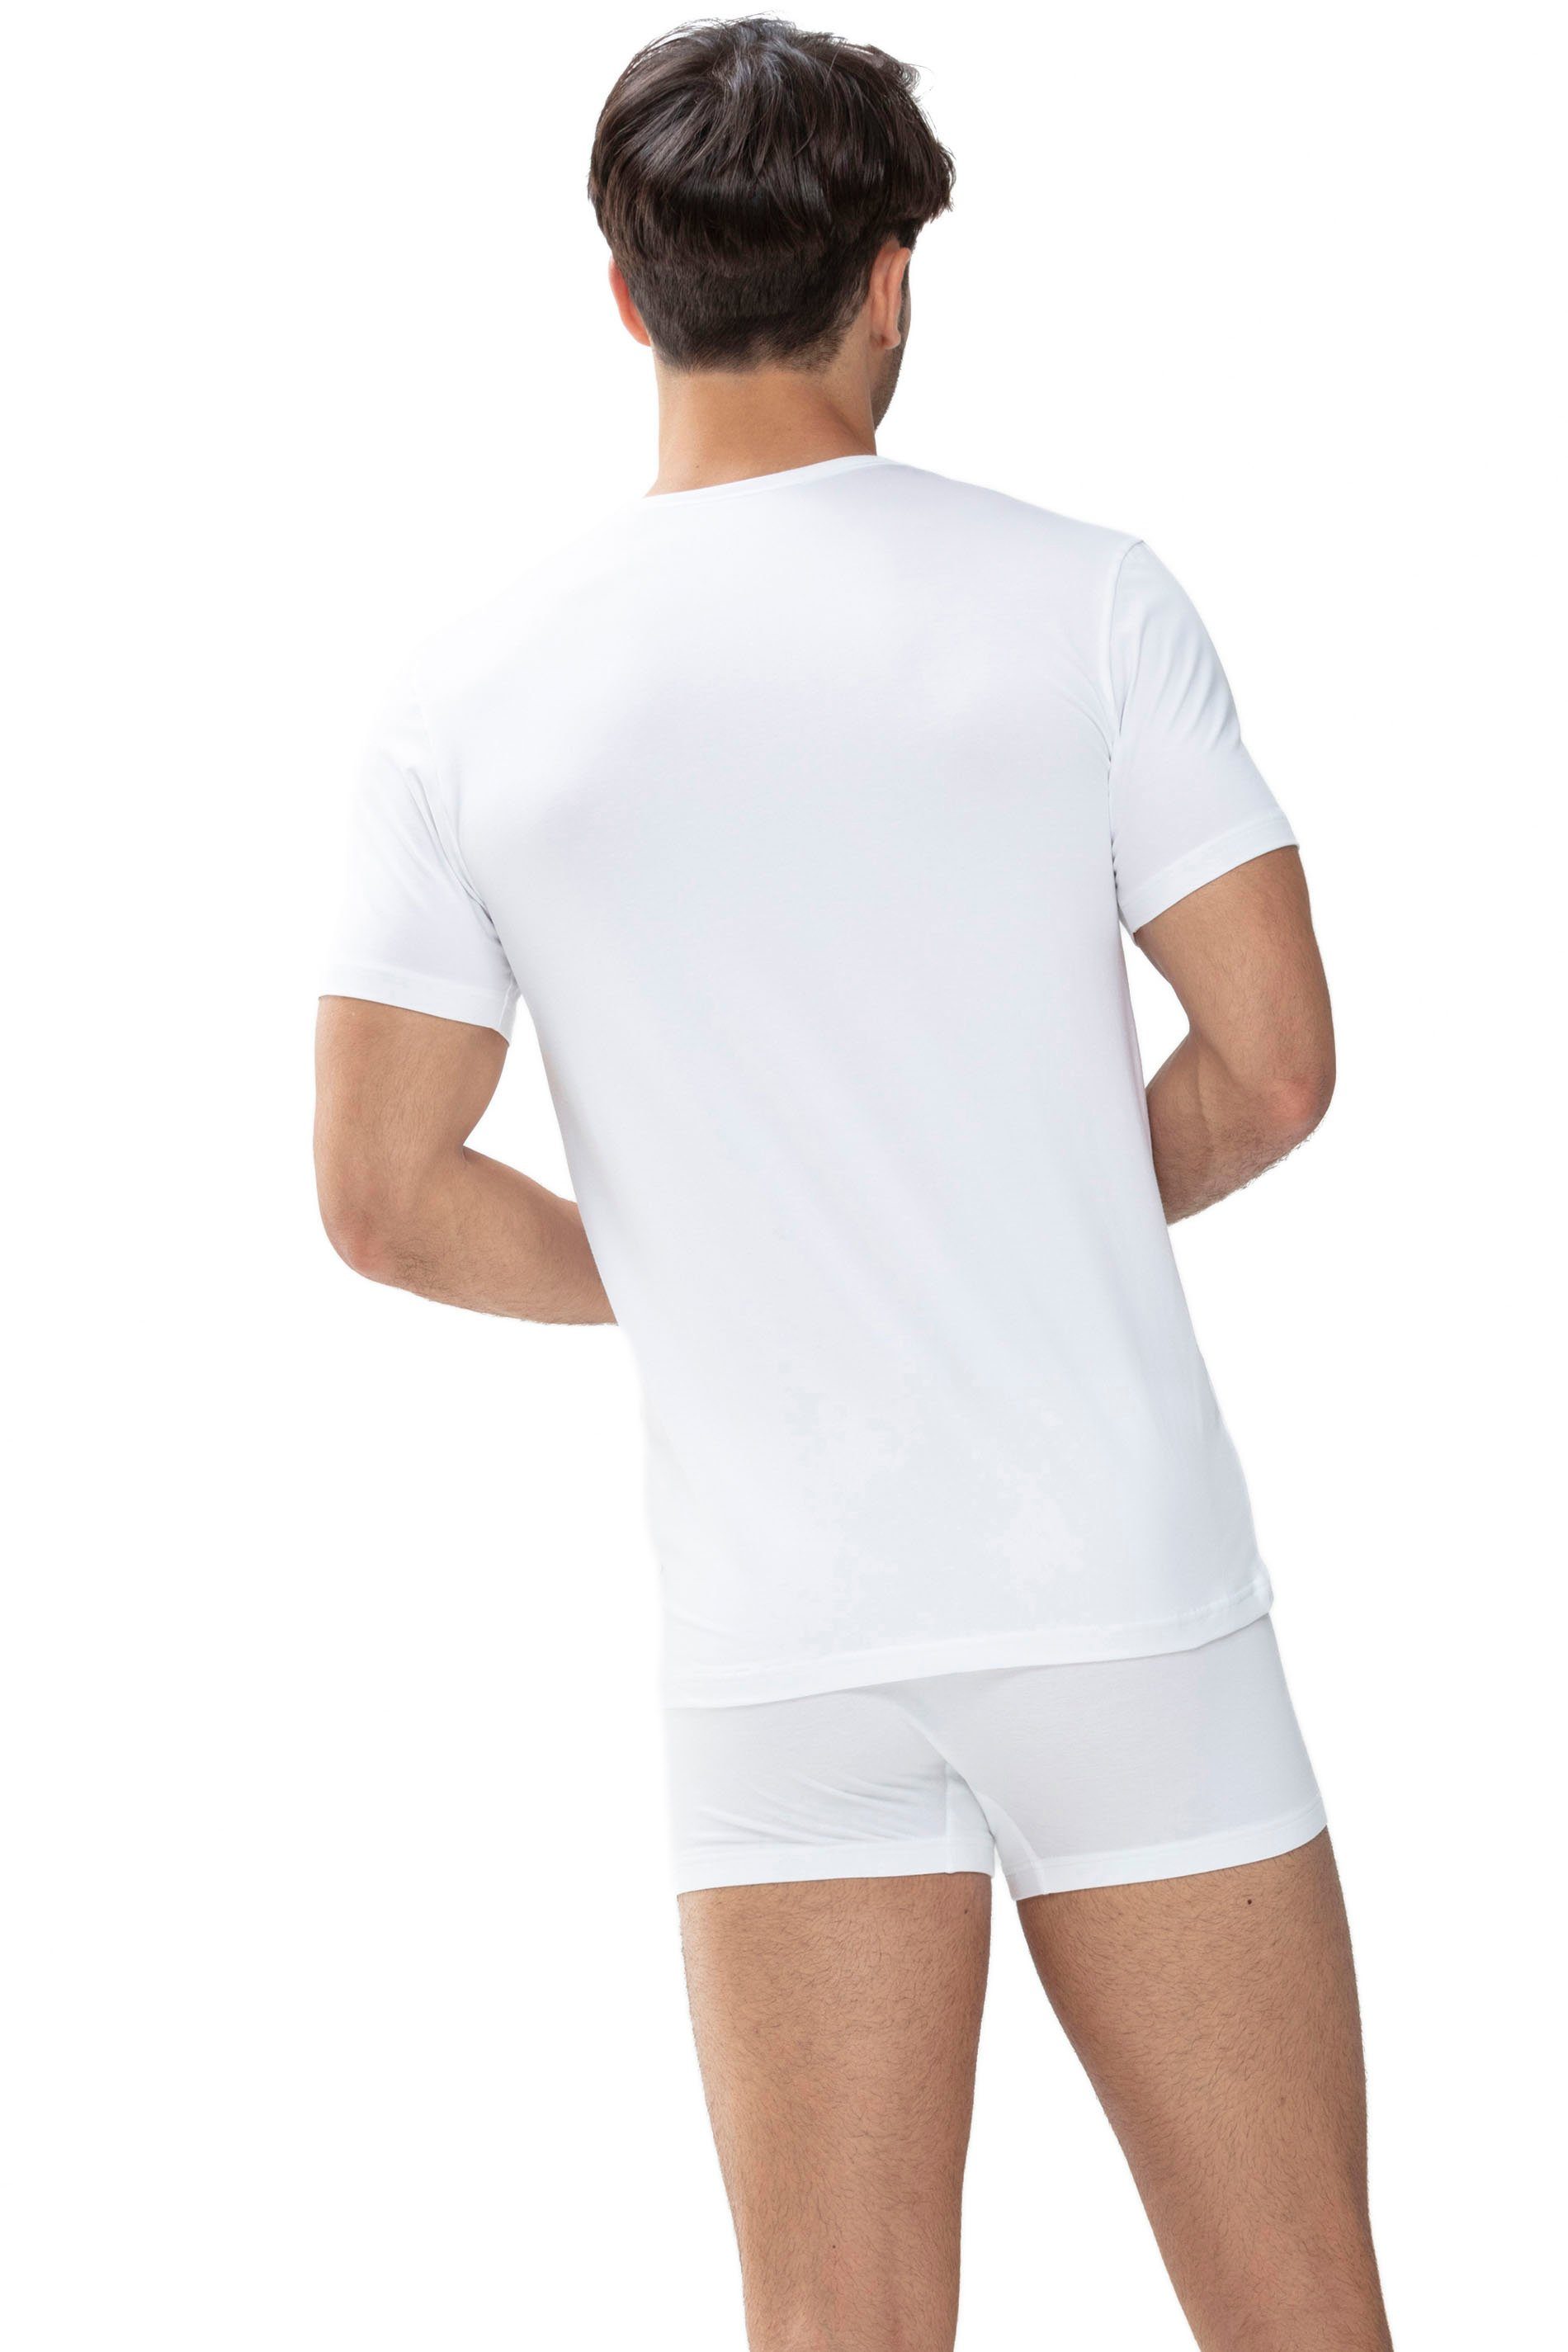 Mey Cotton - 46102 Mey NECK Kurzarmshirt CREW Dry Shirt,